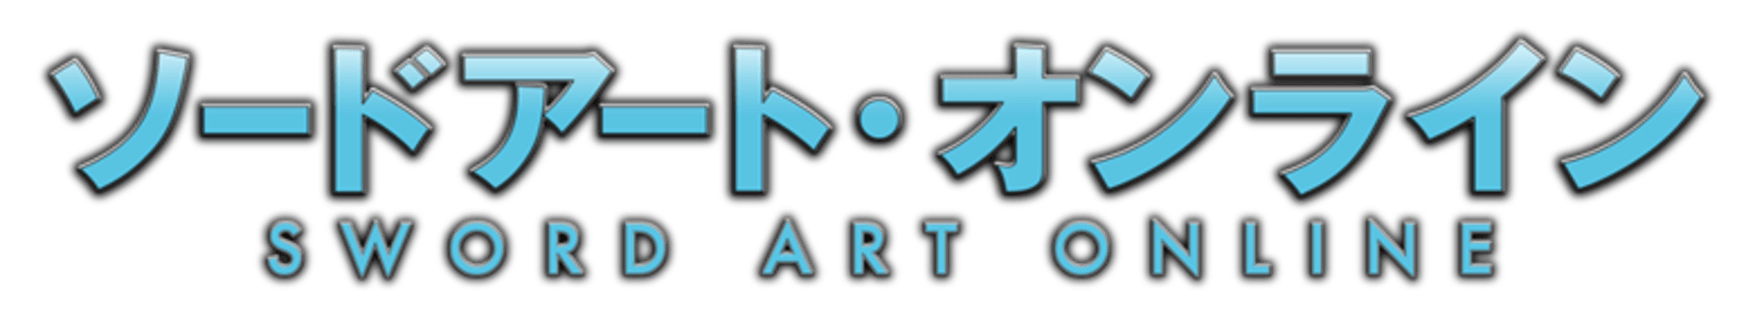 Sao Logo - Image - 757520] | Sword Art Online | Know Your Meme